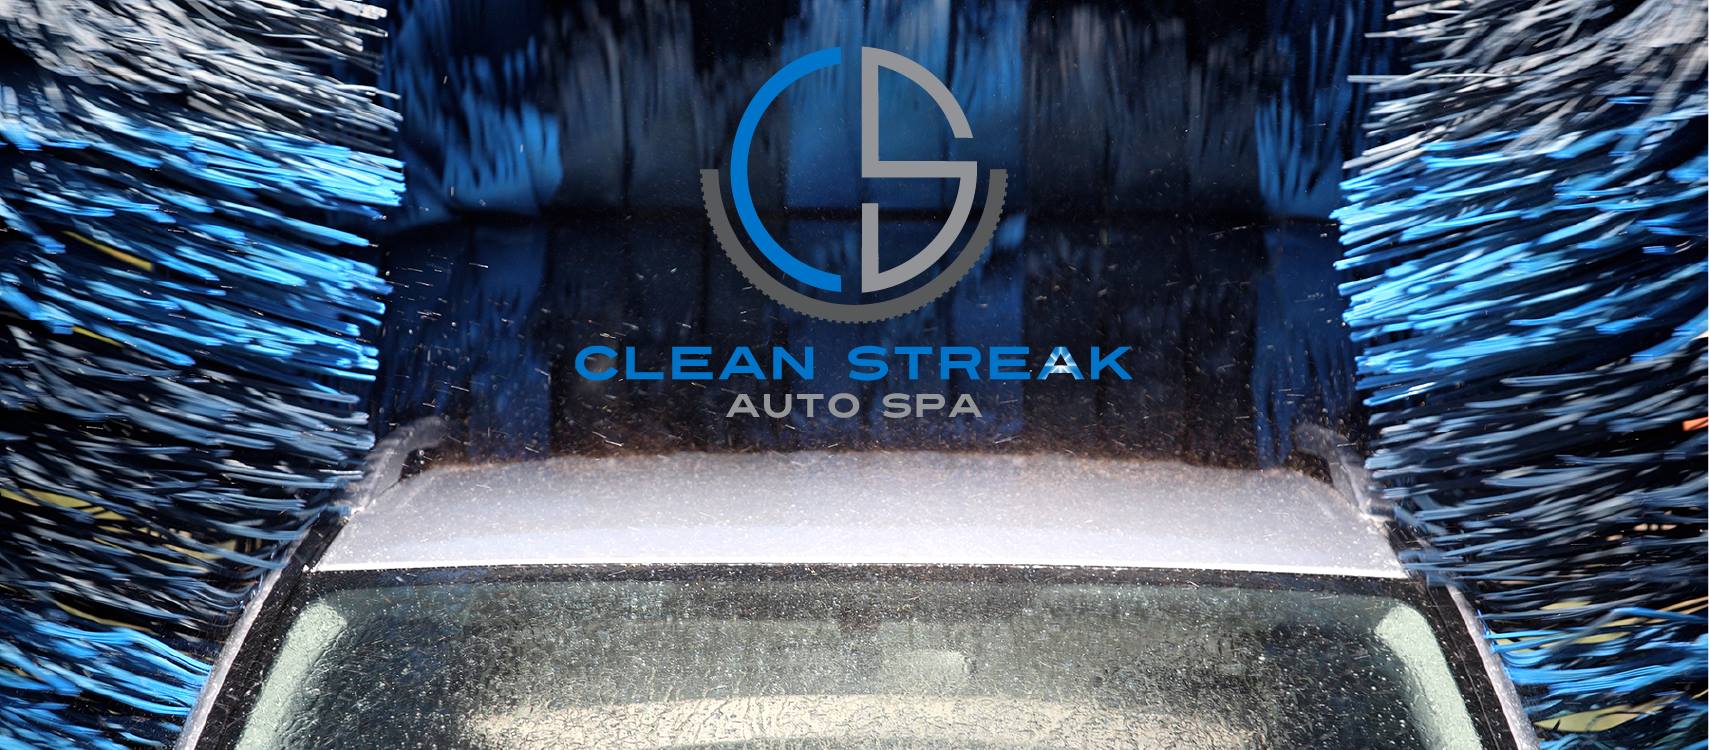 Clean Streak Auto Spa